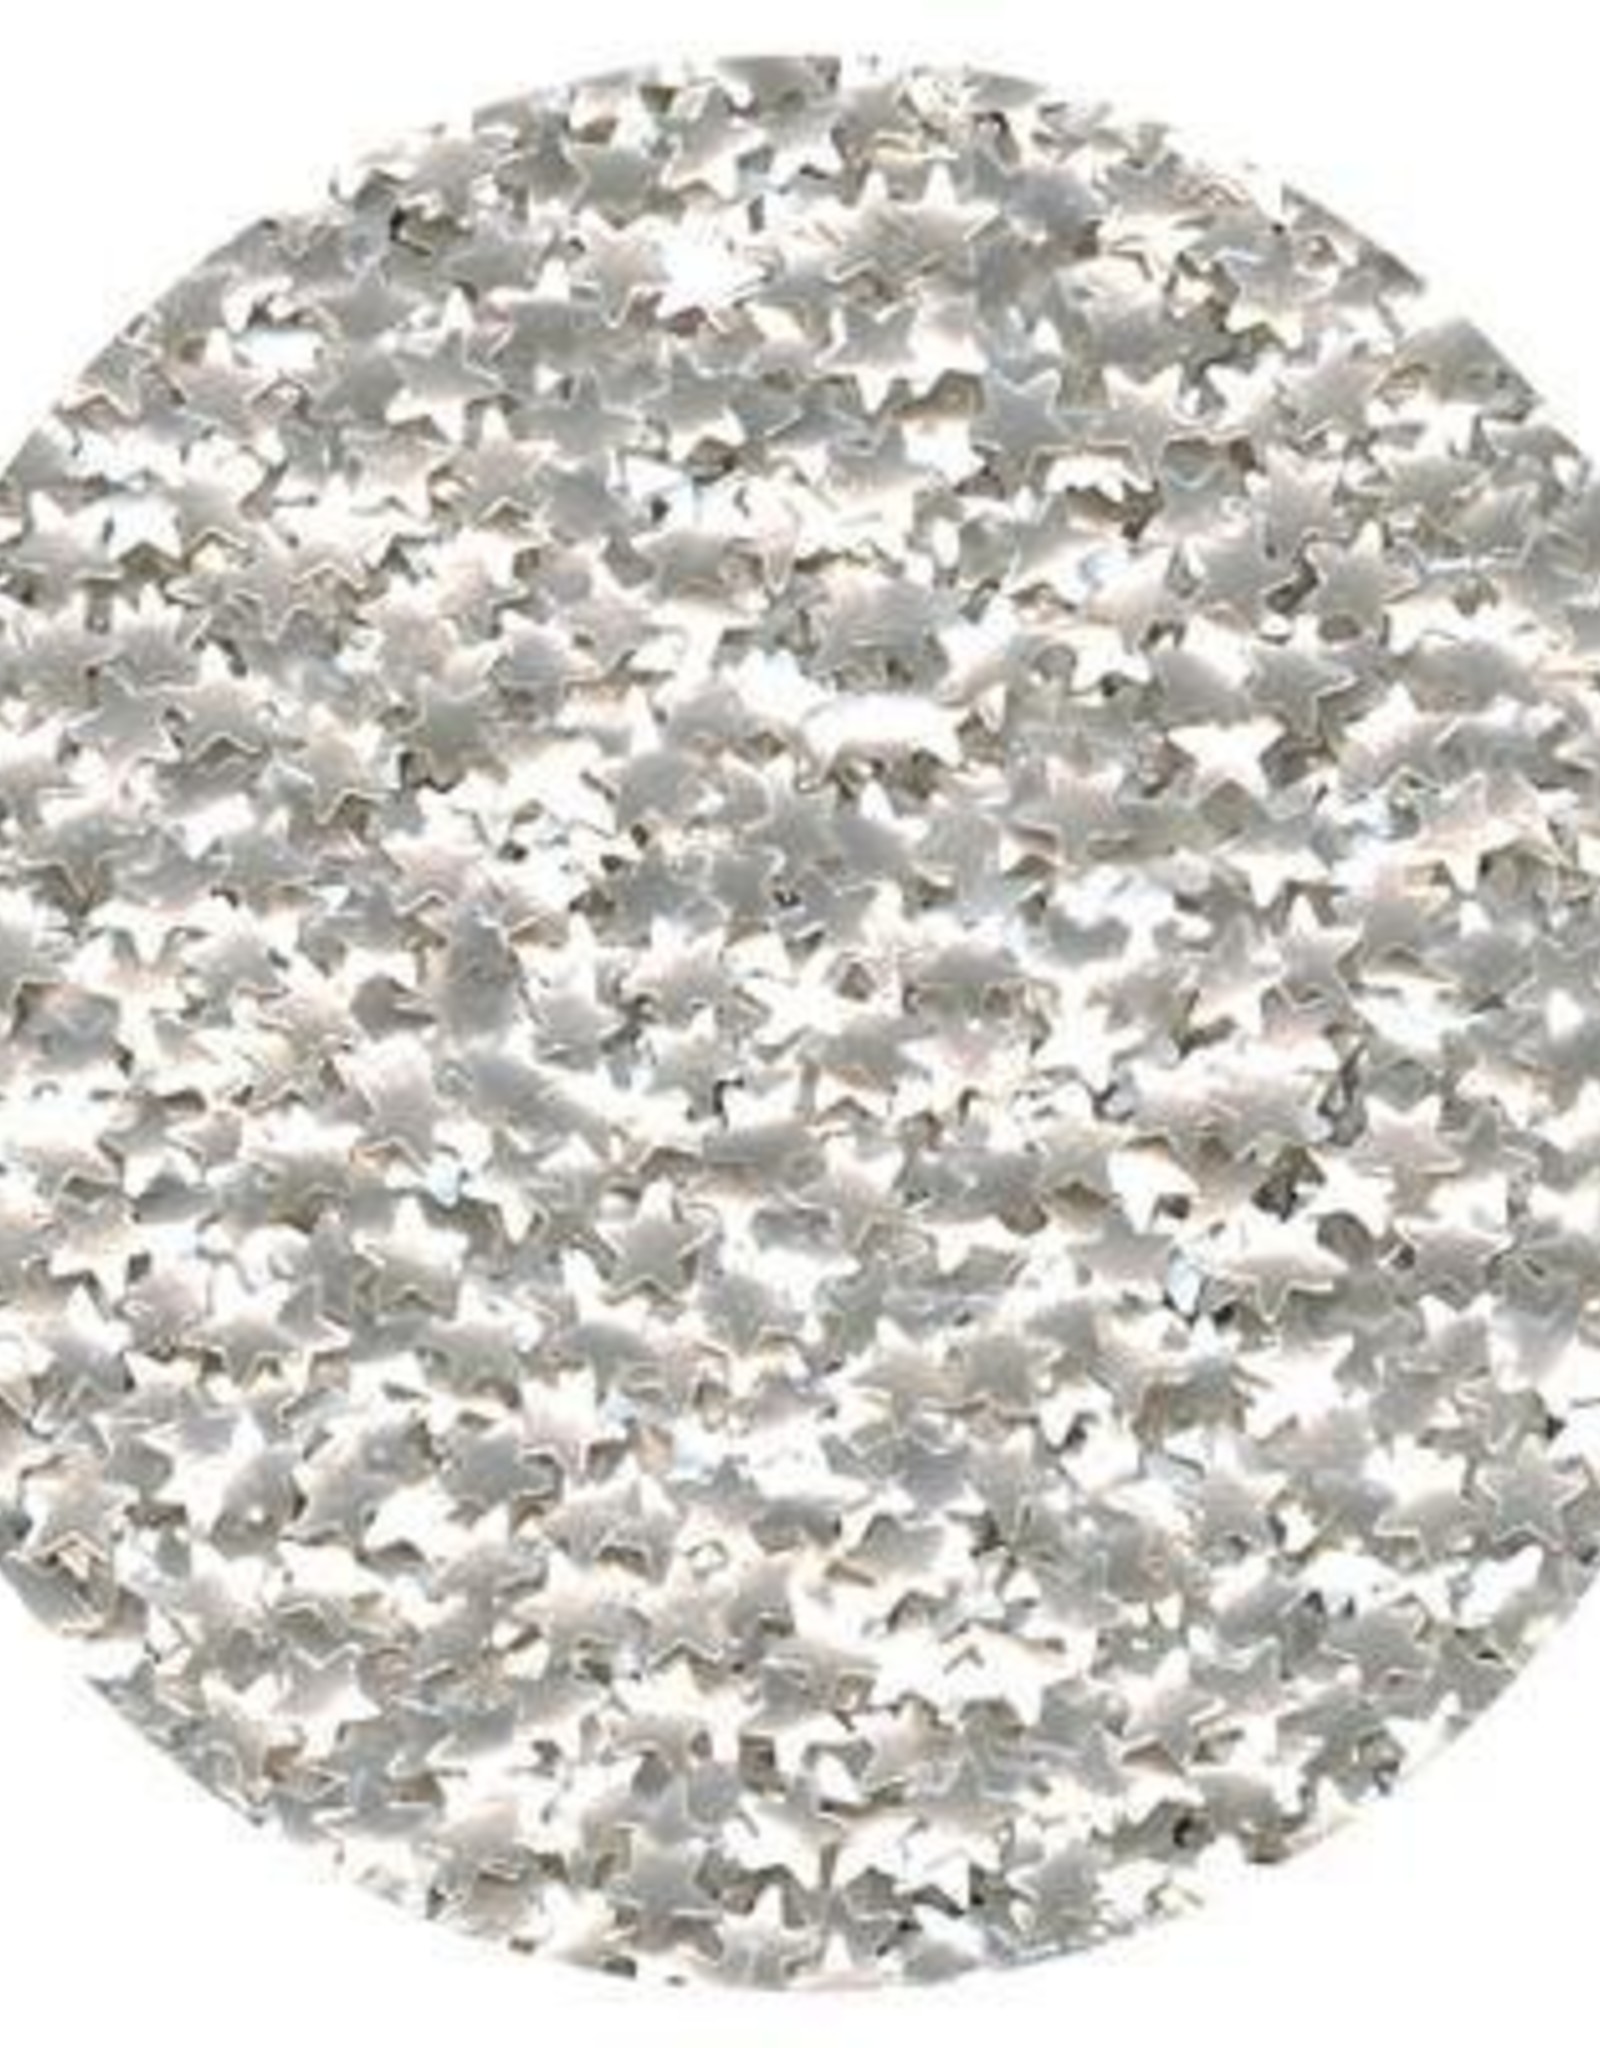 Shaped Edible Glitter (Silver Stars)